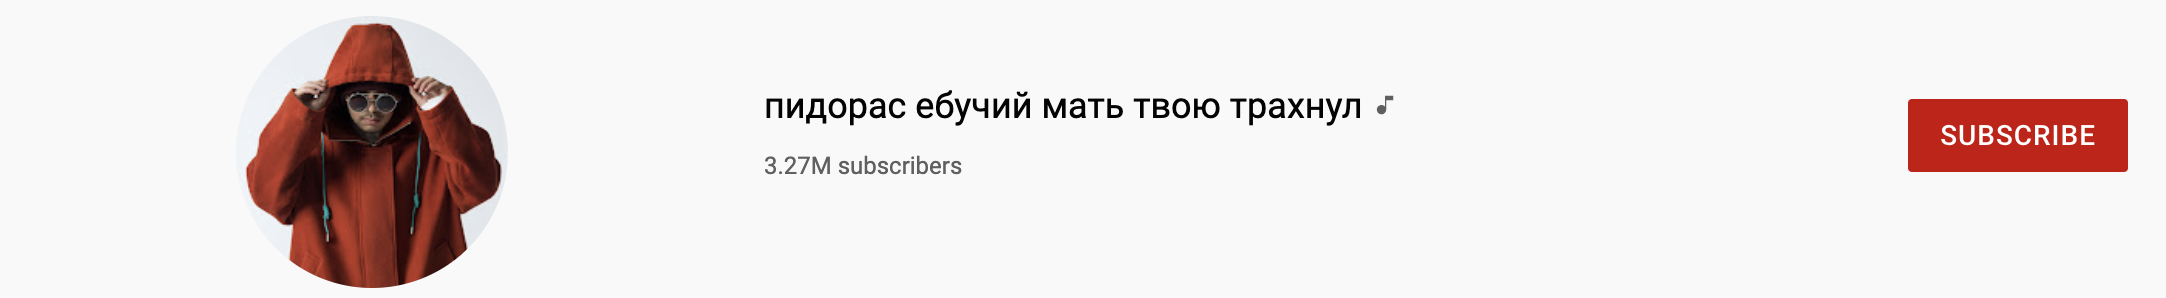 [updated] 6 billion views gone! Namewee's youtube channel gets hacked and renamed as russian vulgarities | weirdkaya